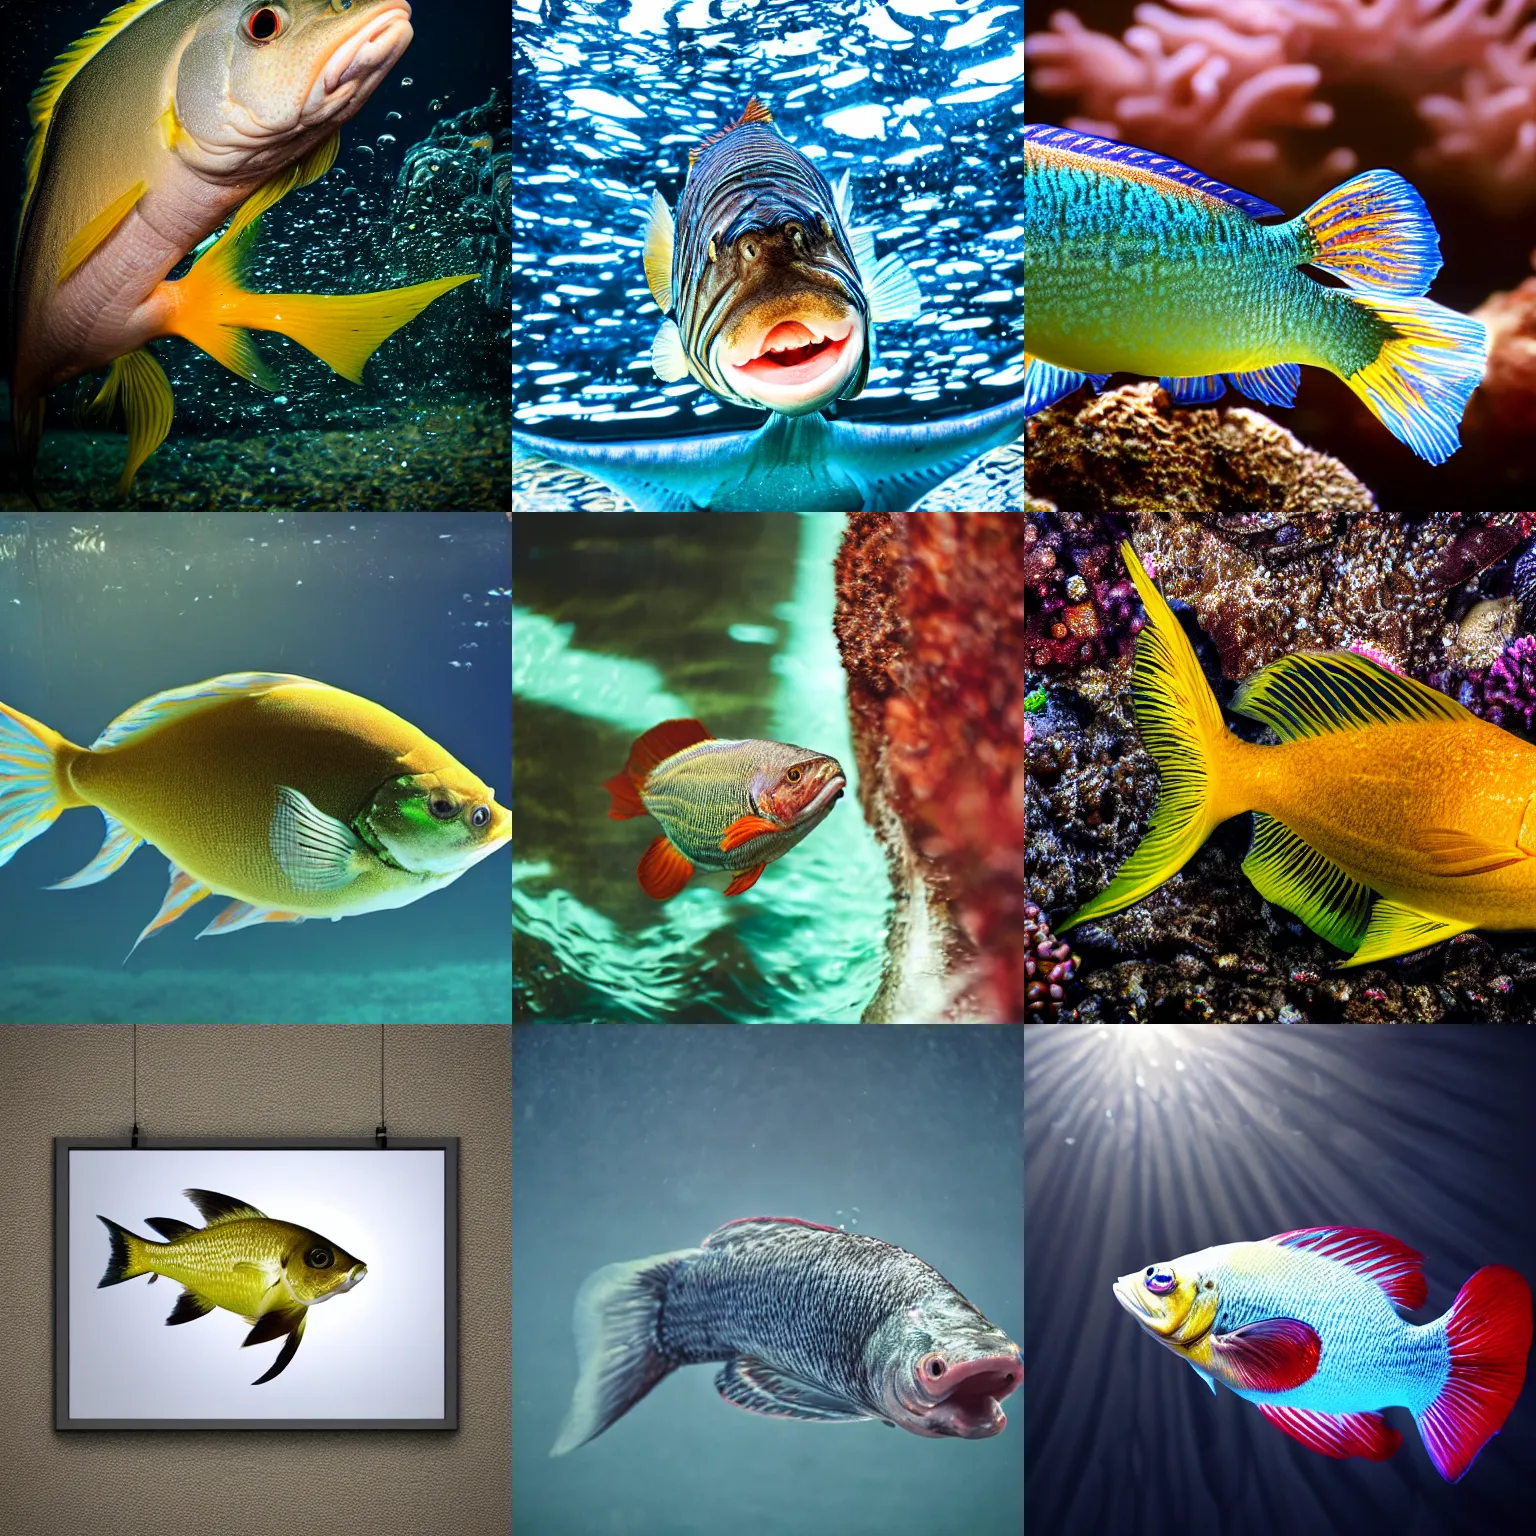 Prompt: a fish saying hello, award winning photography, ultra realistic, studio photo